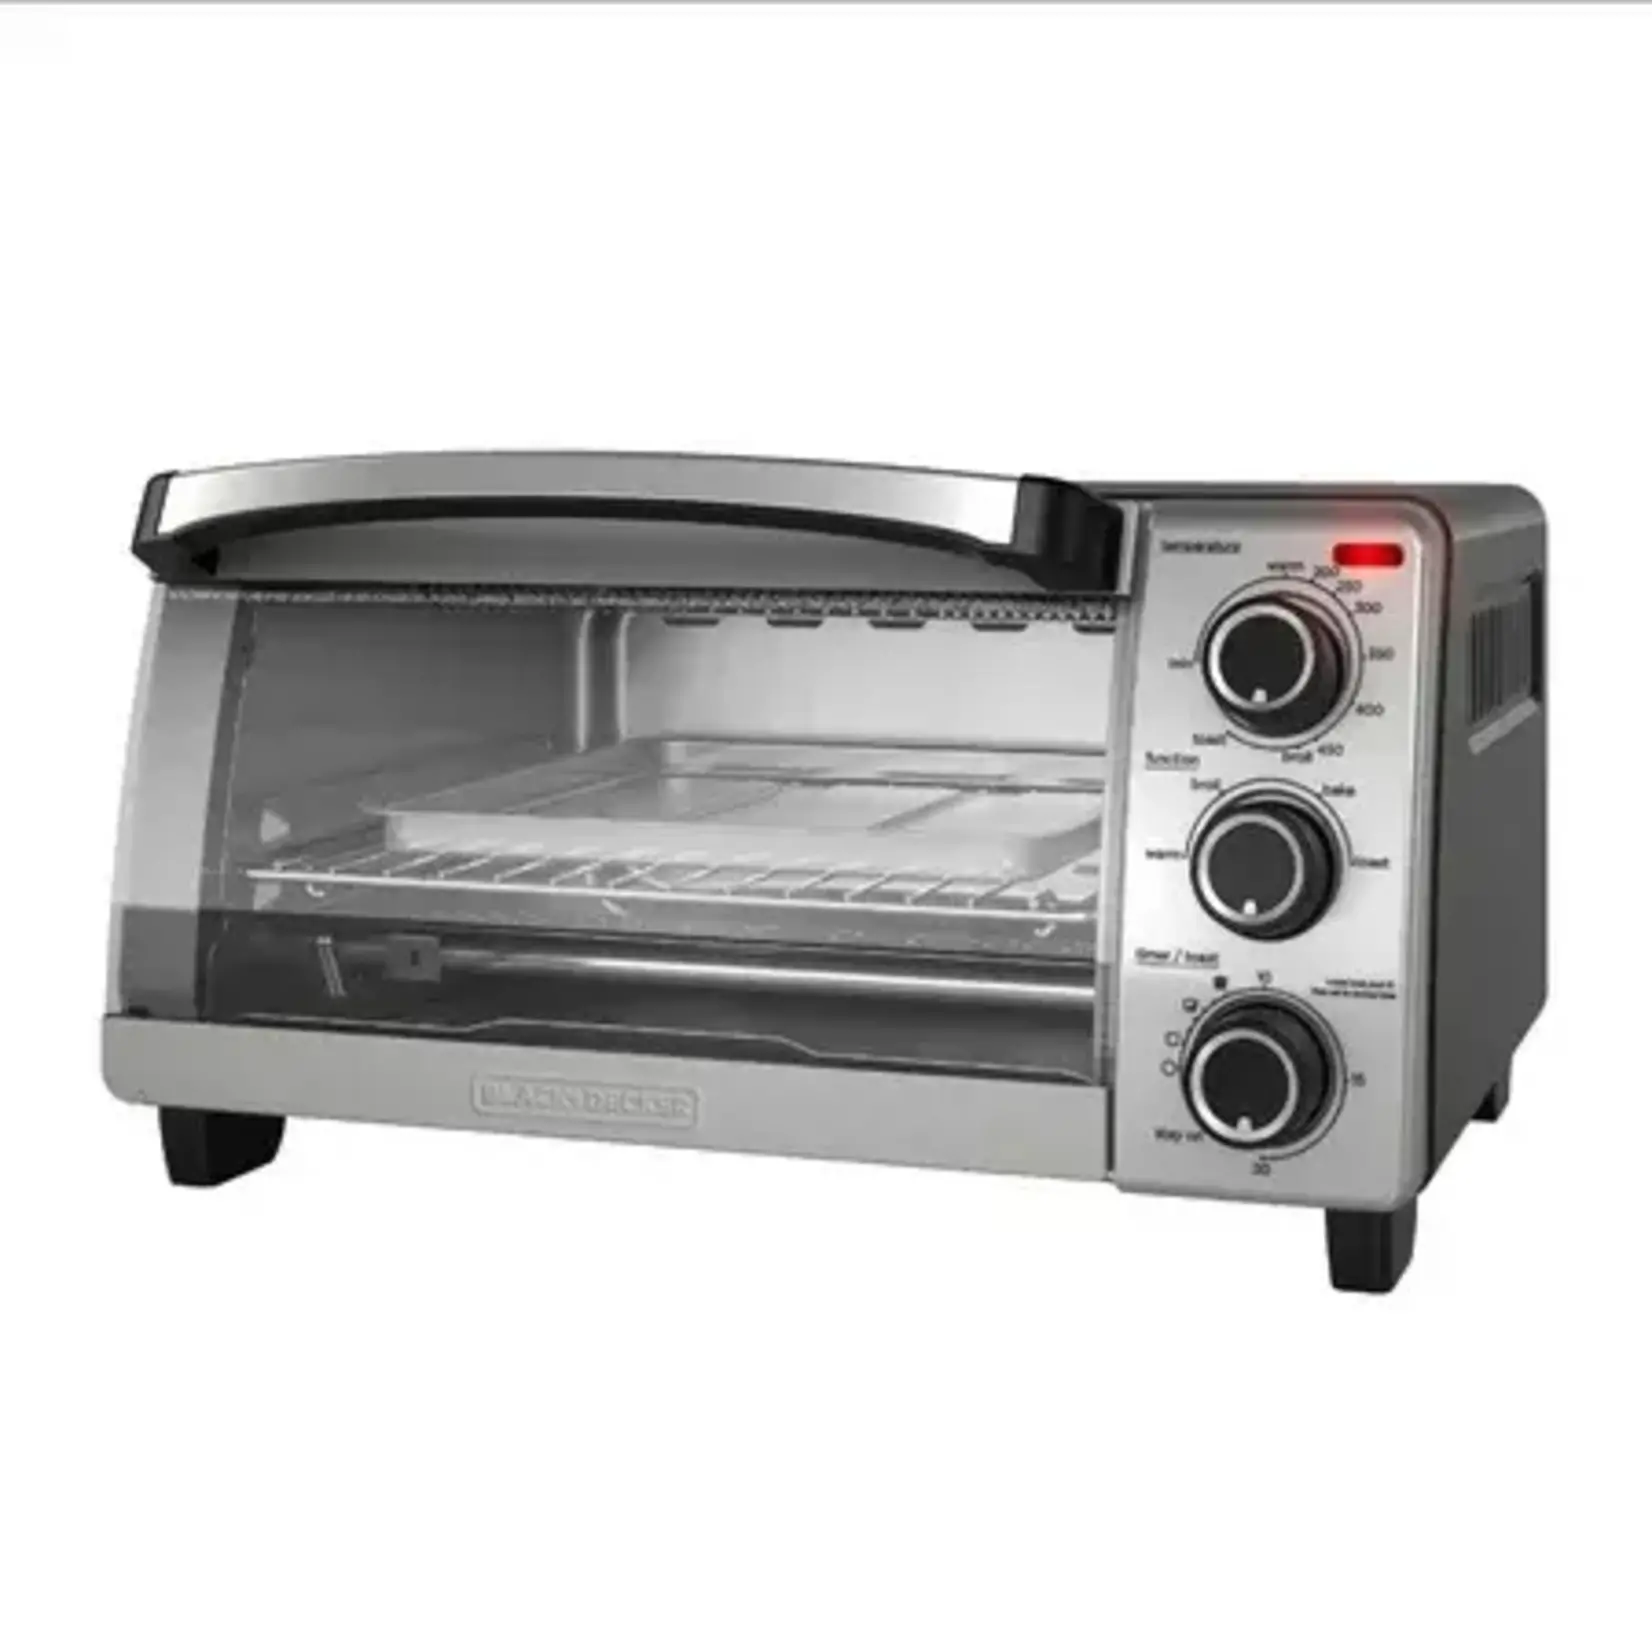 https://cdn.shoplightspeed.com/shops/627977/files/57472873/1652x1652x2/to1755sbt4-slice-toaster-oven-9-pizza.jpg